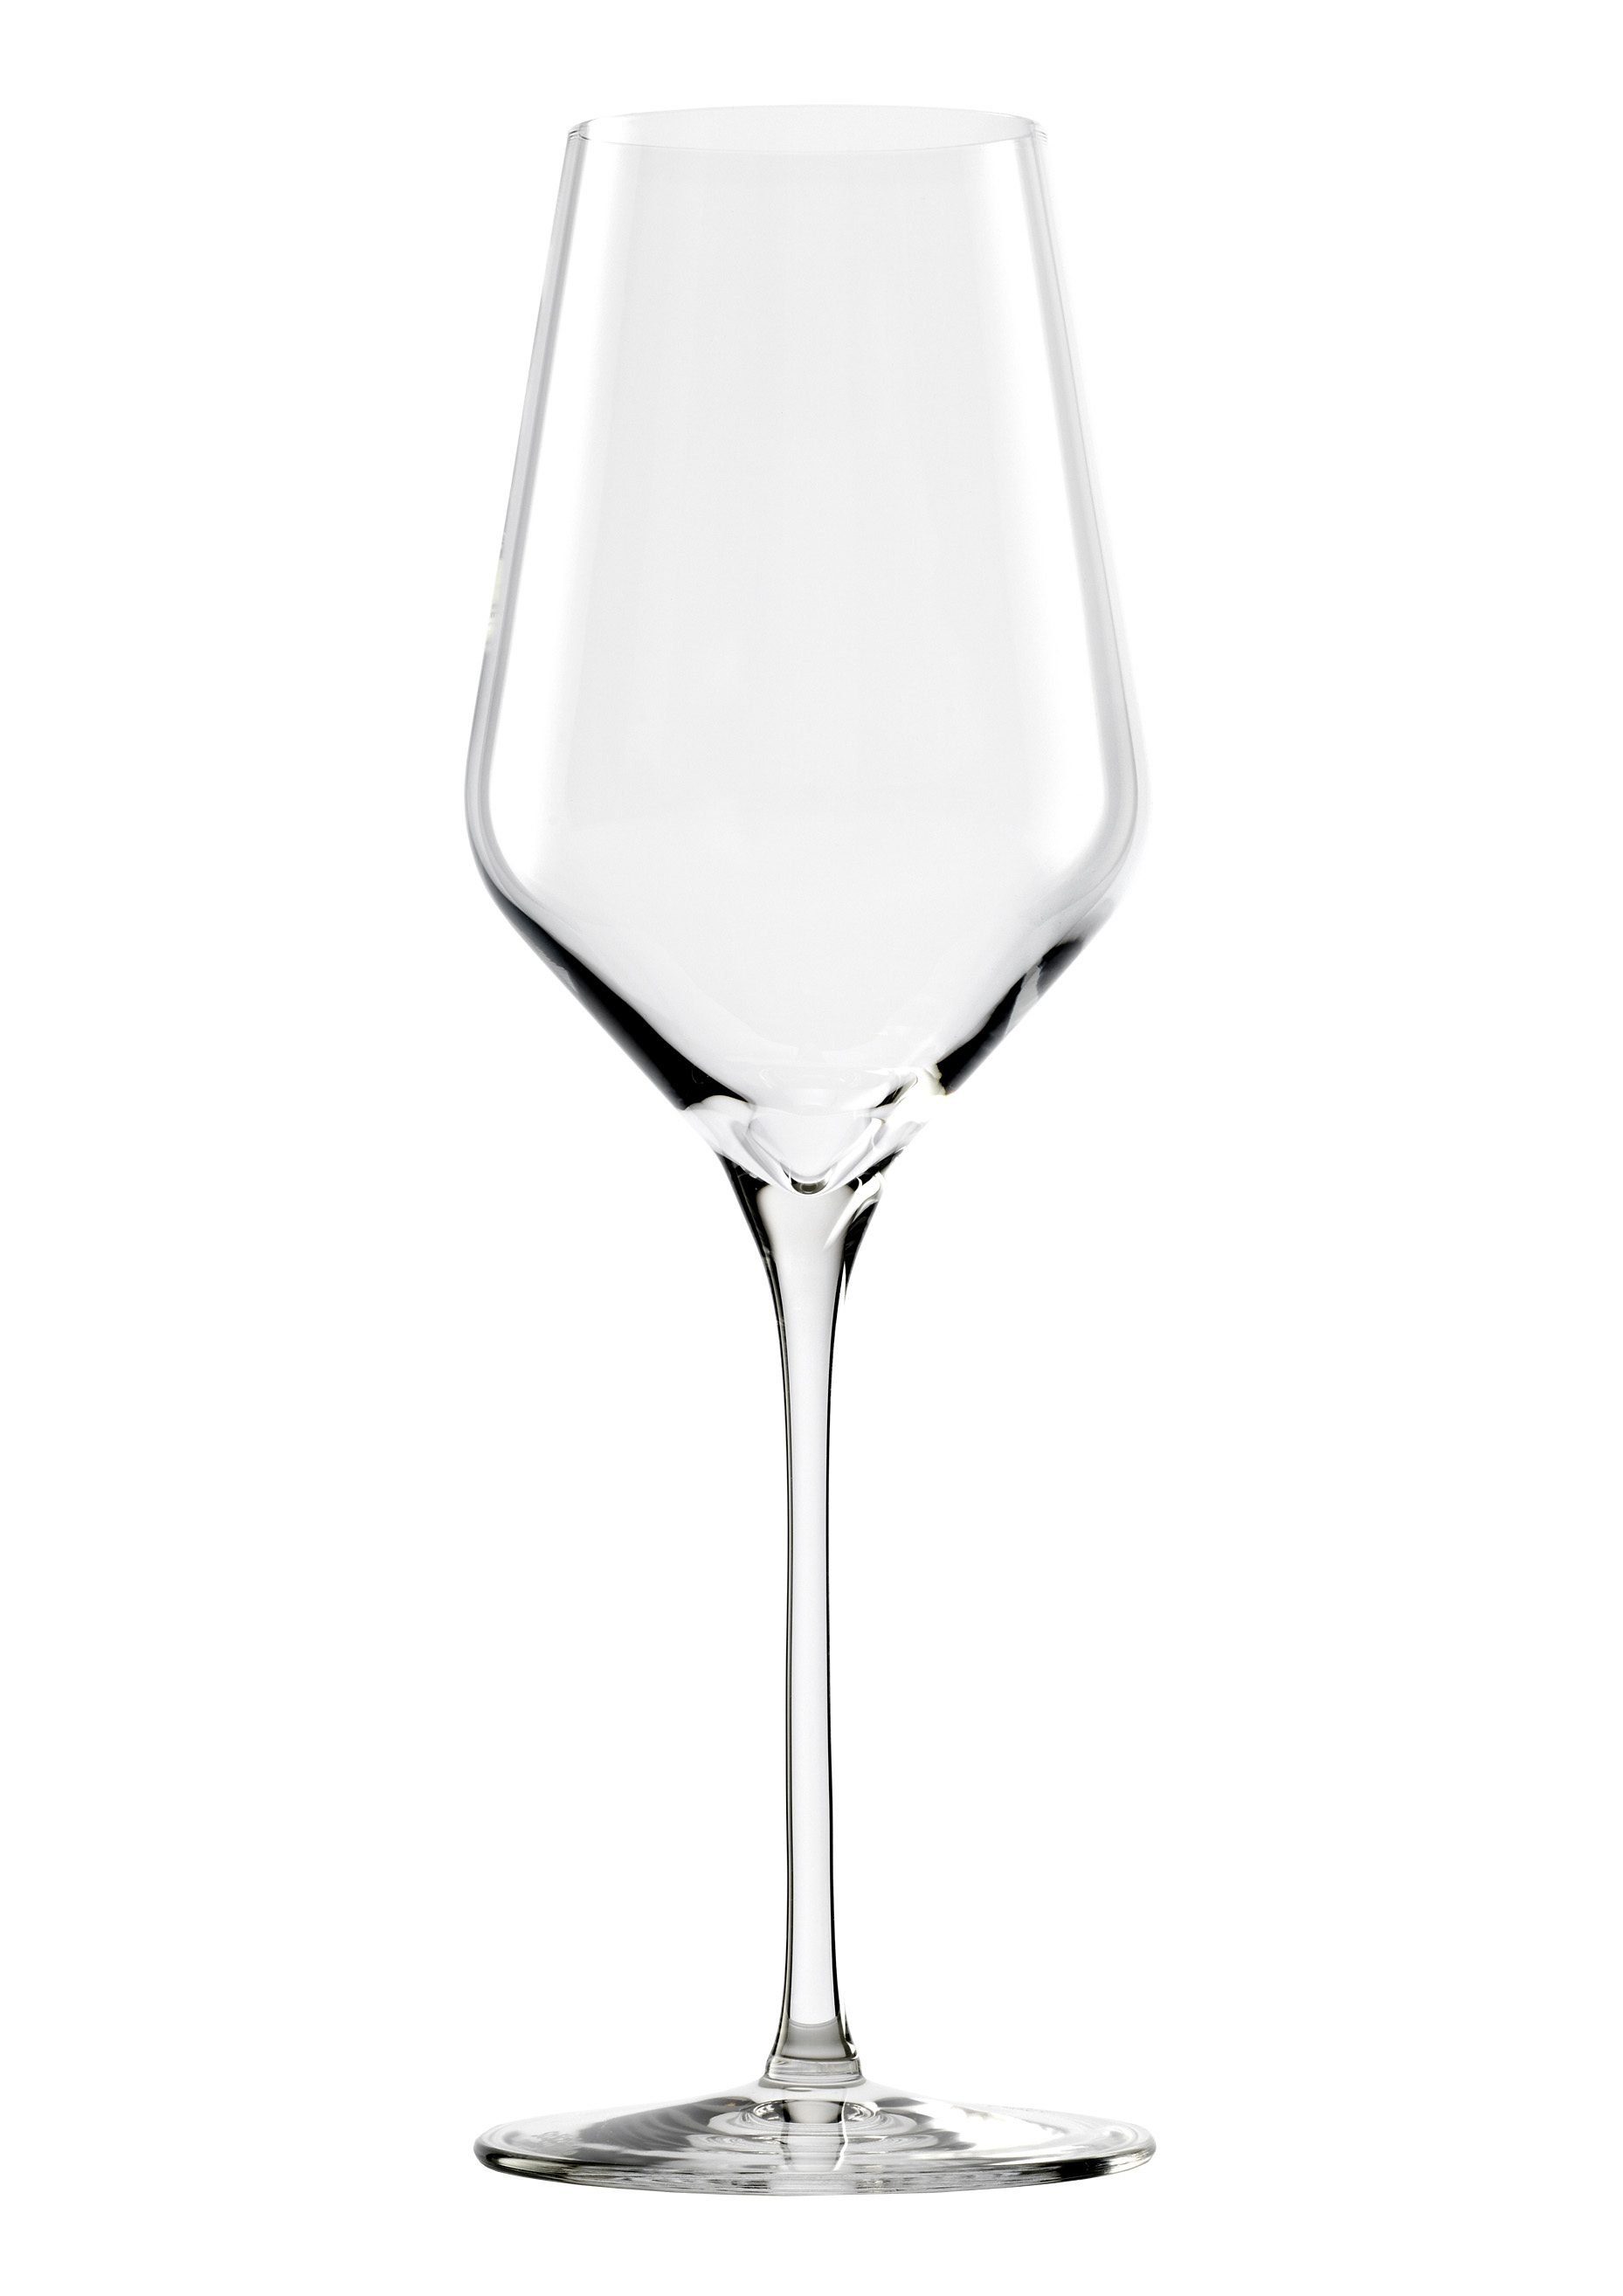 Stölzle Weißweinglas QUATROPHIL, Kristallglas, 6-teilig